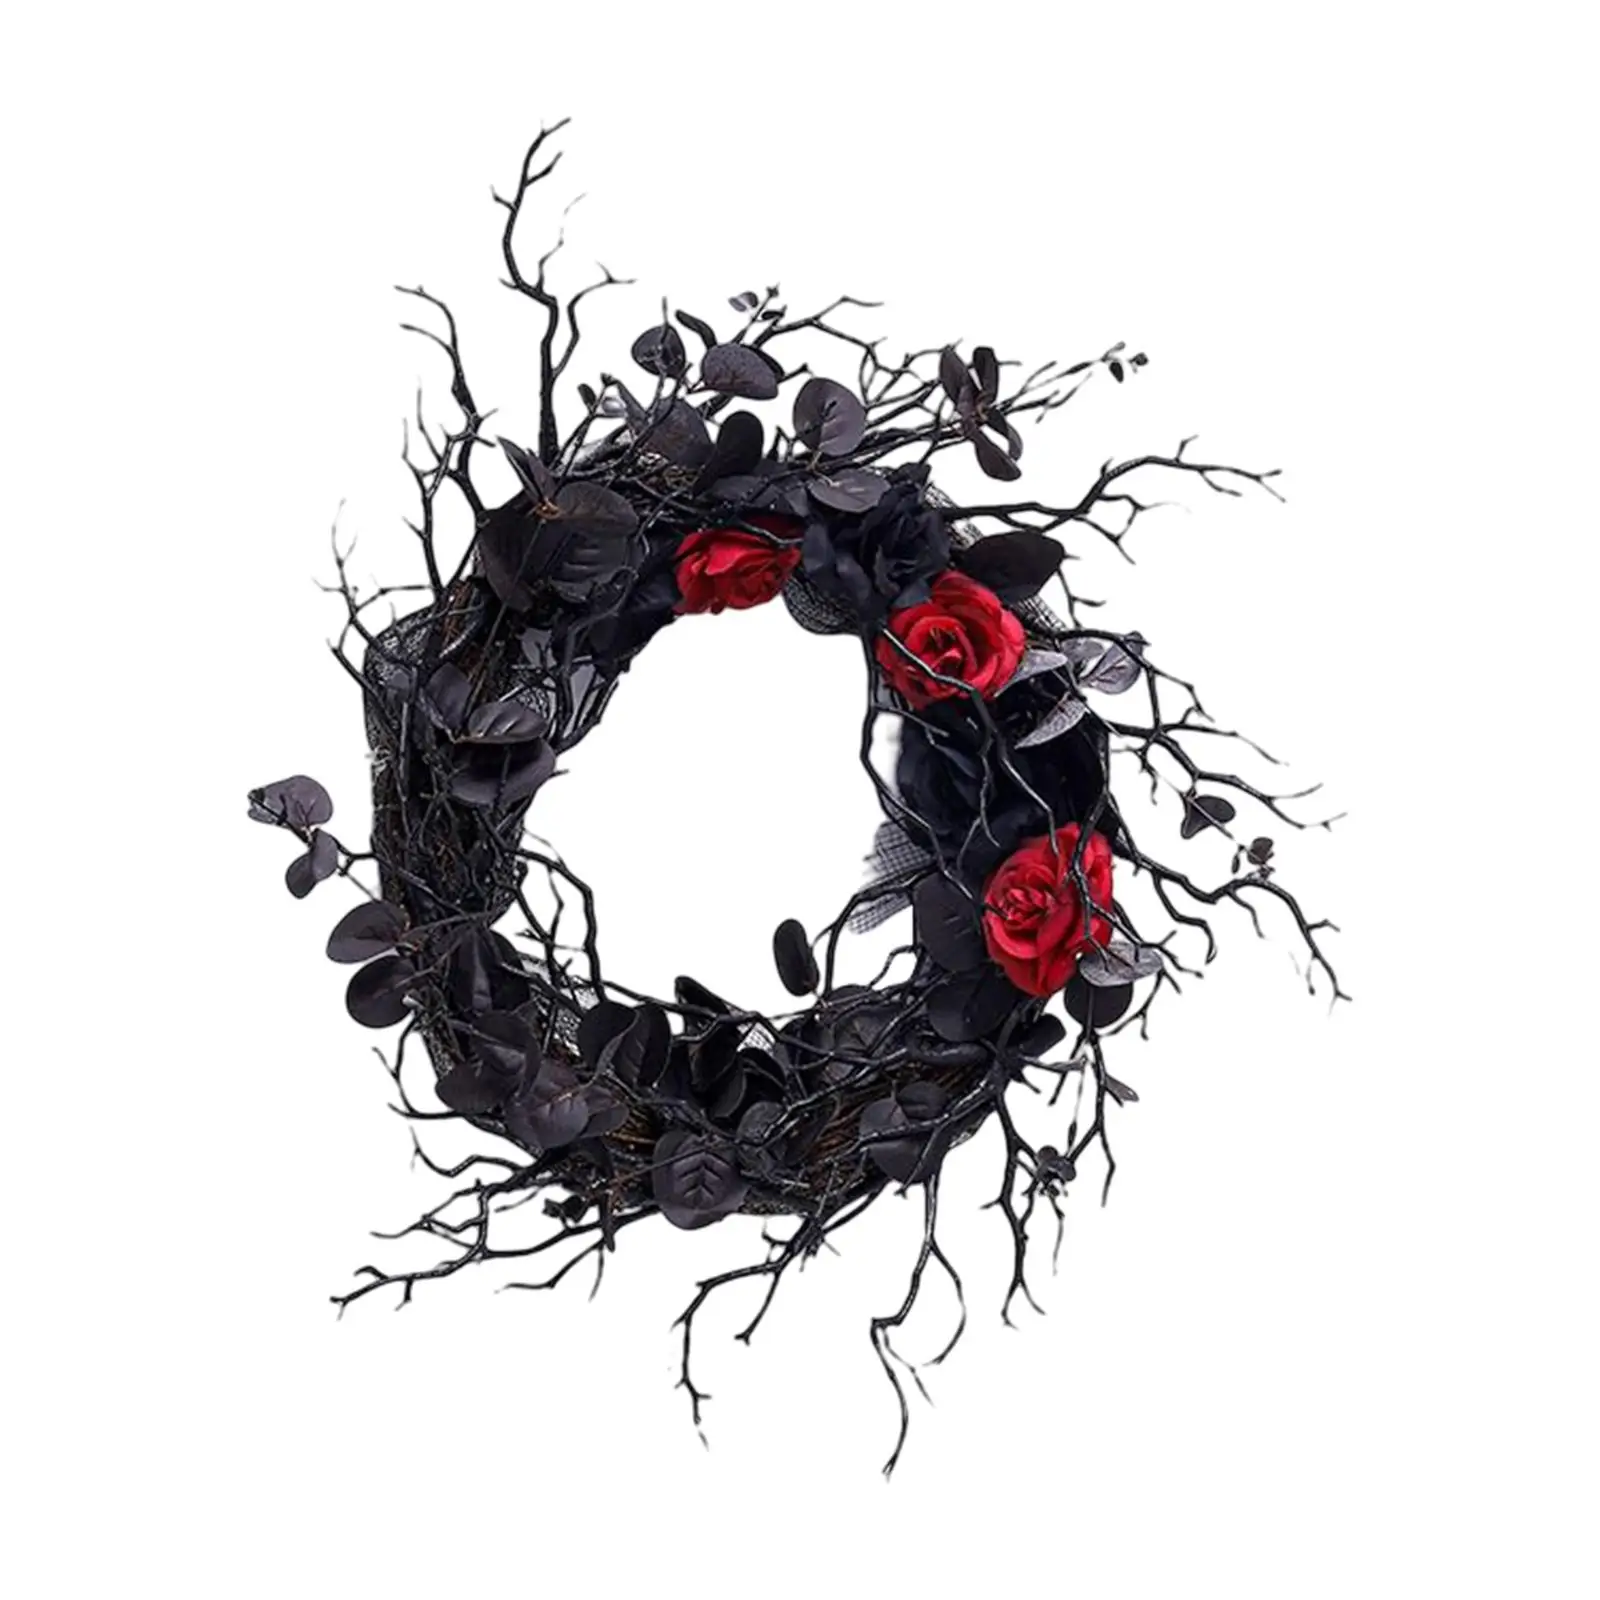 Artificial Halloween Wreath Black Red Festive Atmosphere 14inch Spooky Ornament for Party Door Decorations Indoor Outdoor